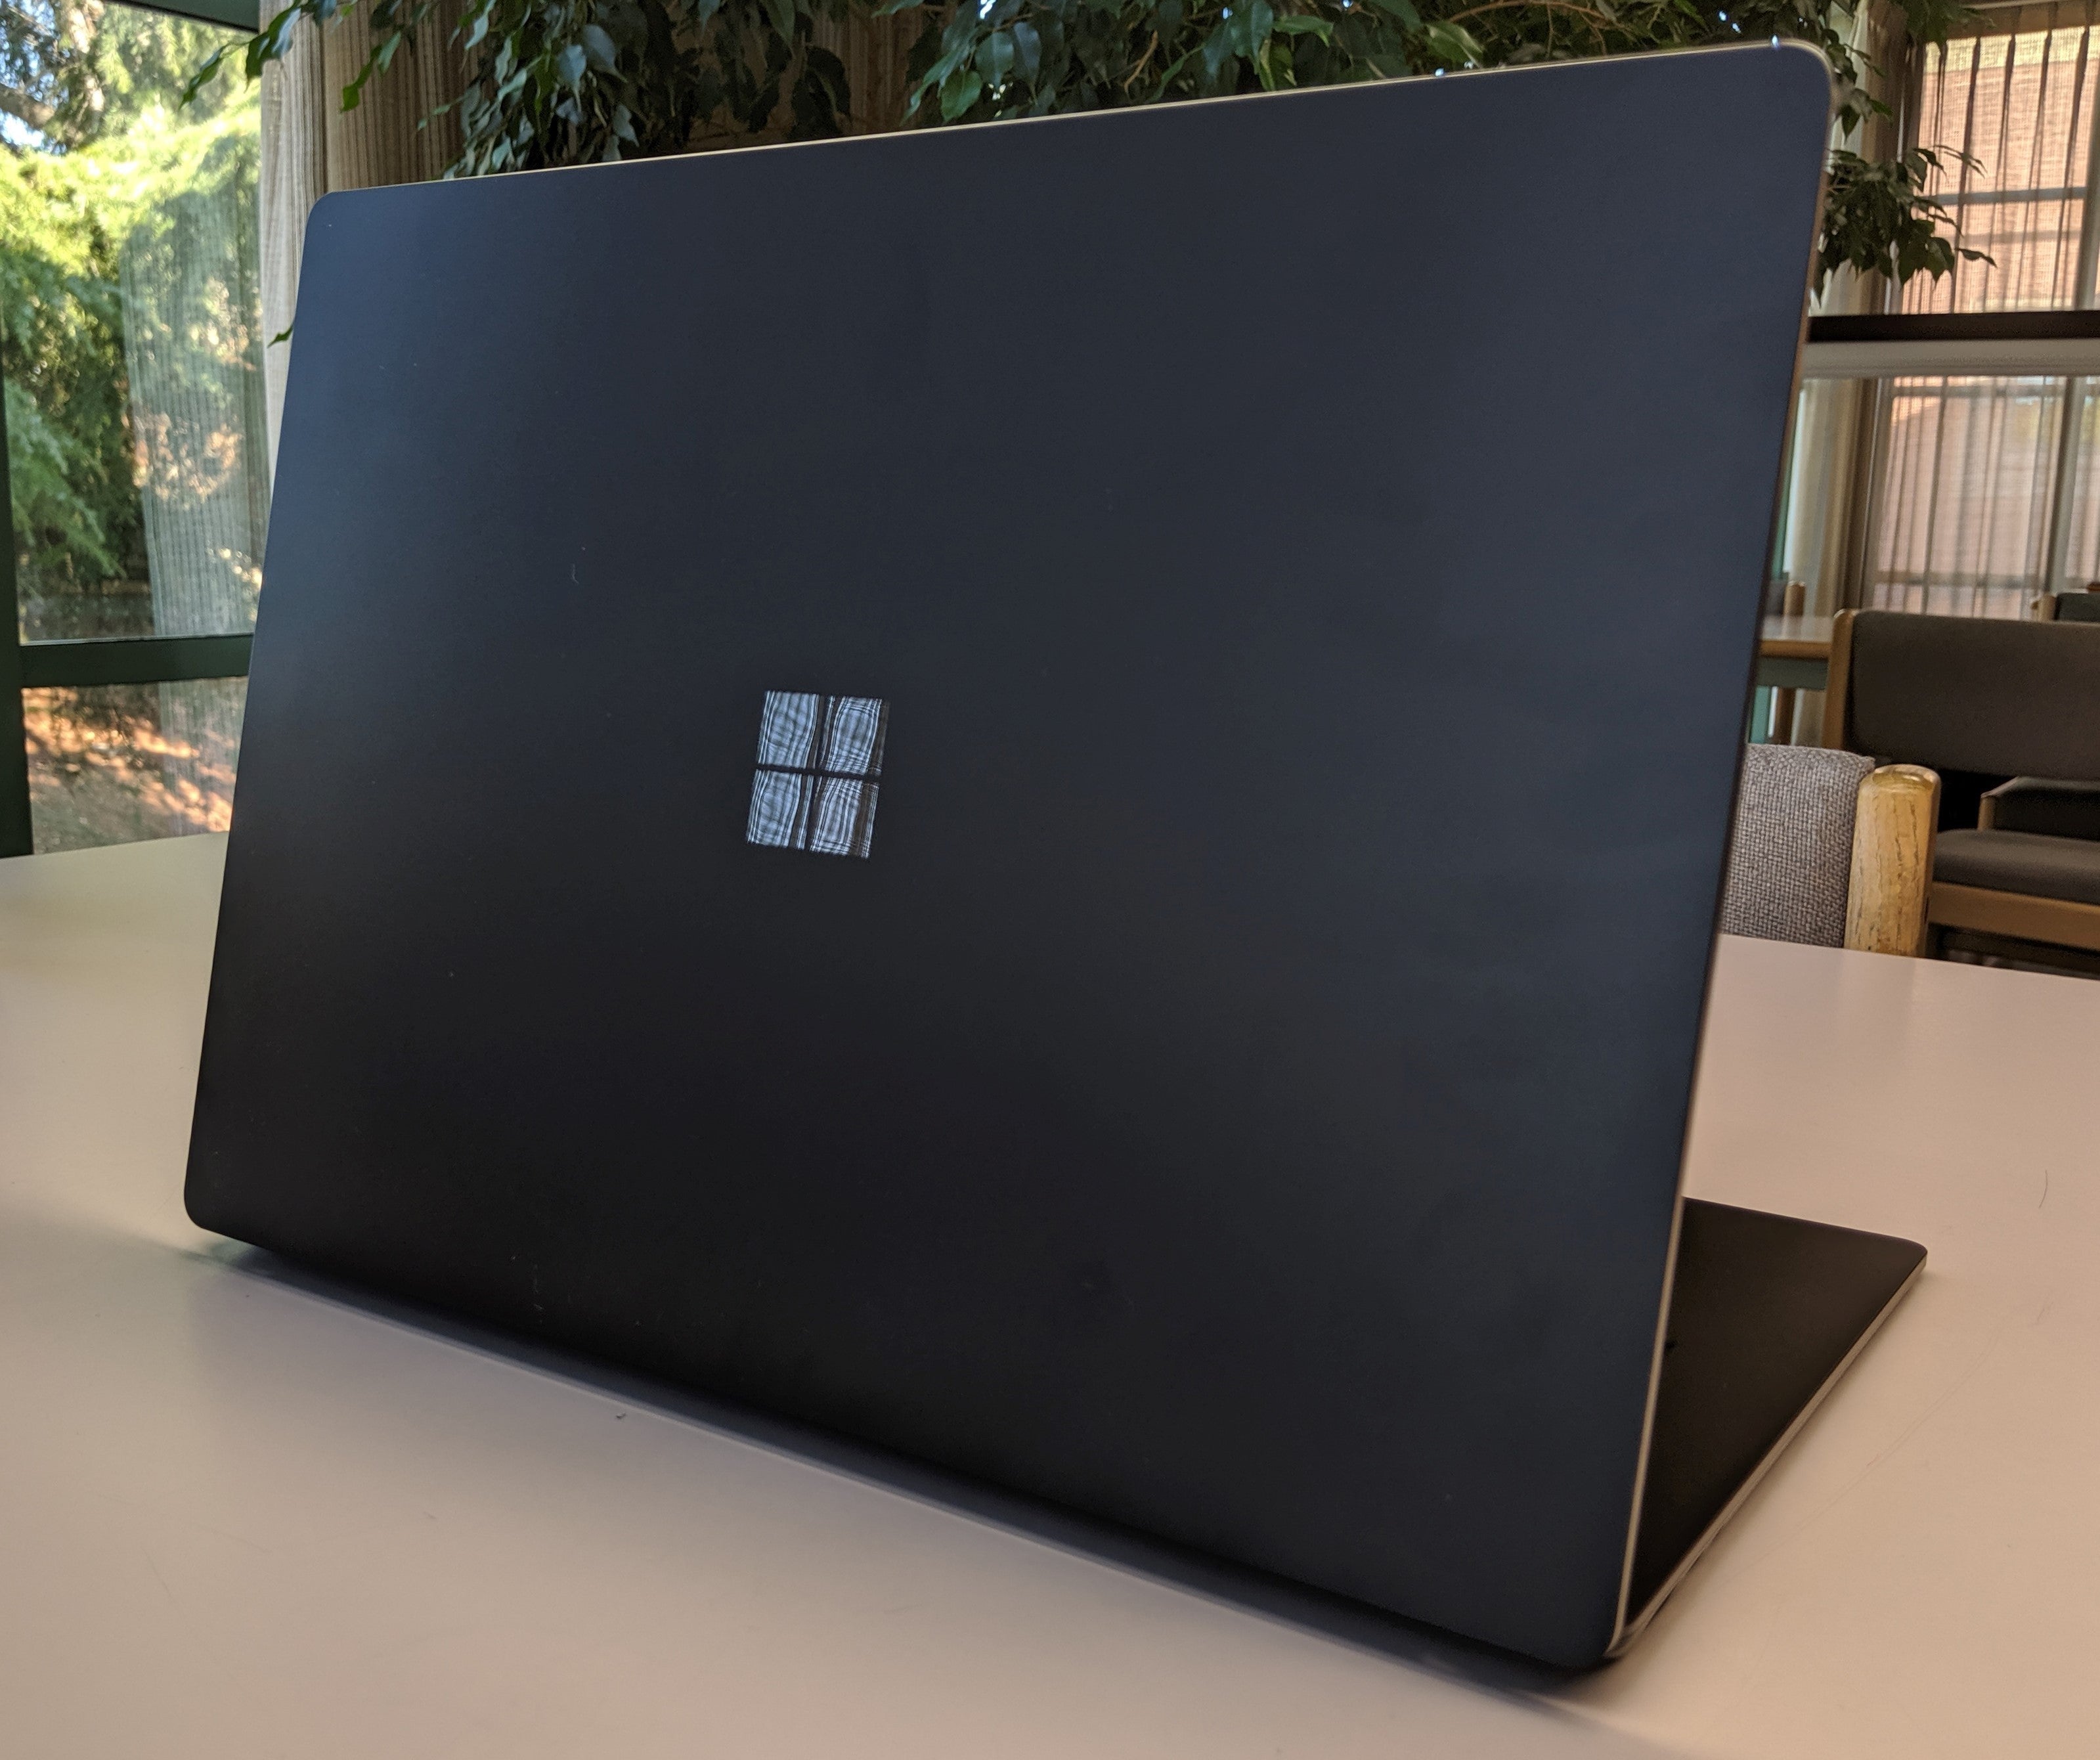 microsoft surface laptop latest model